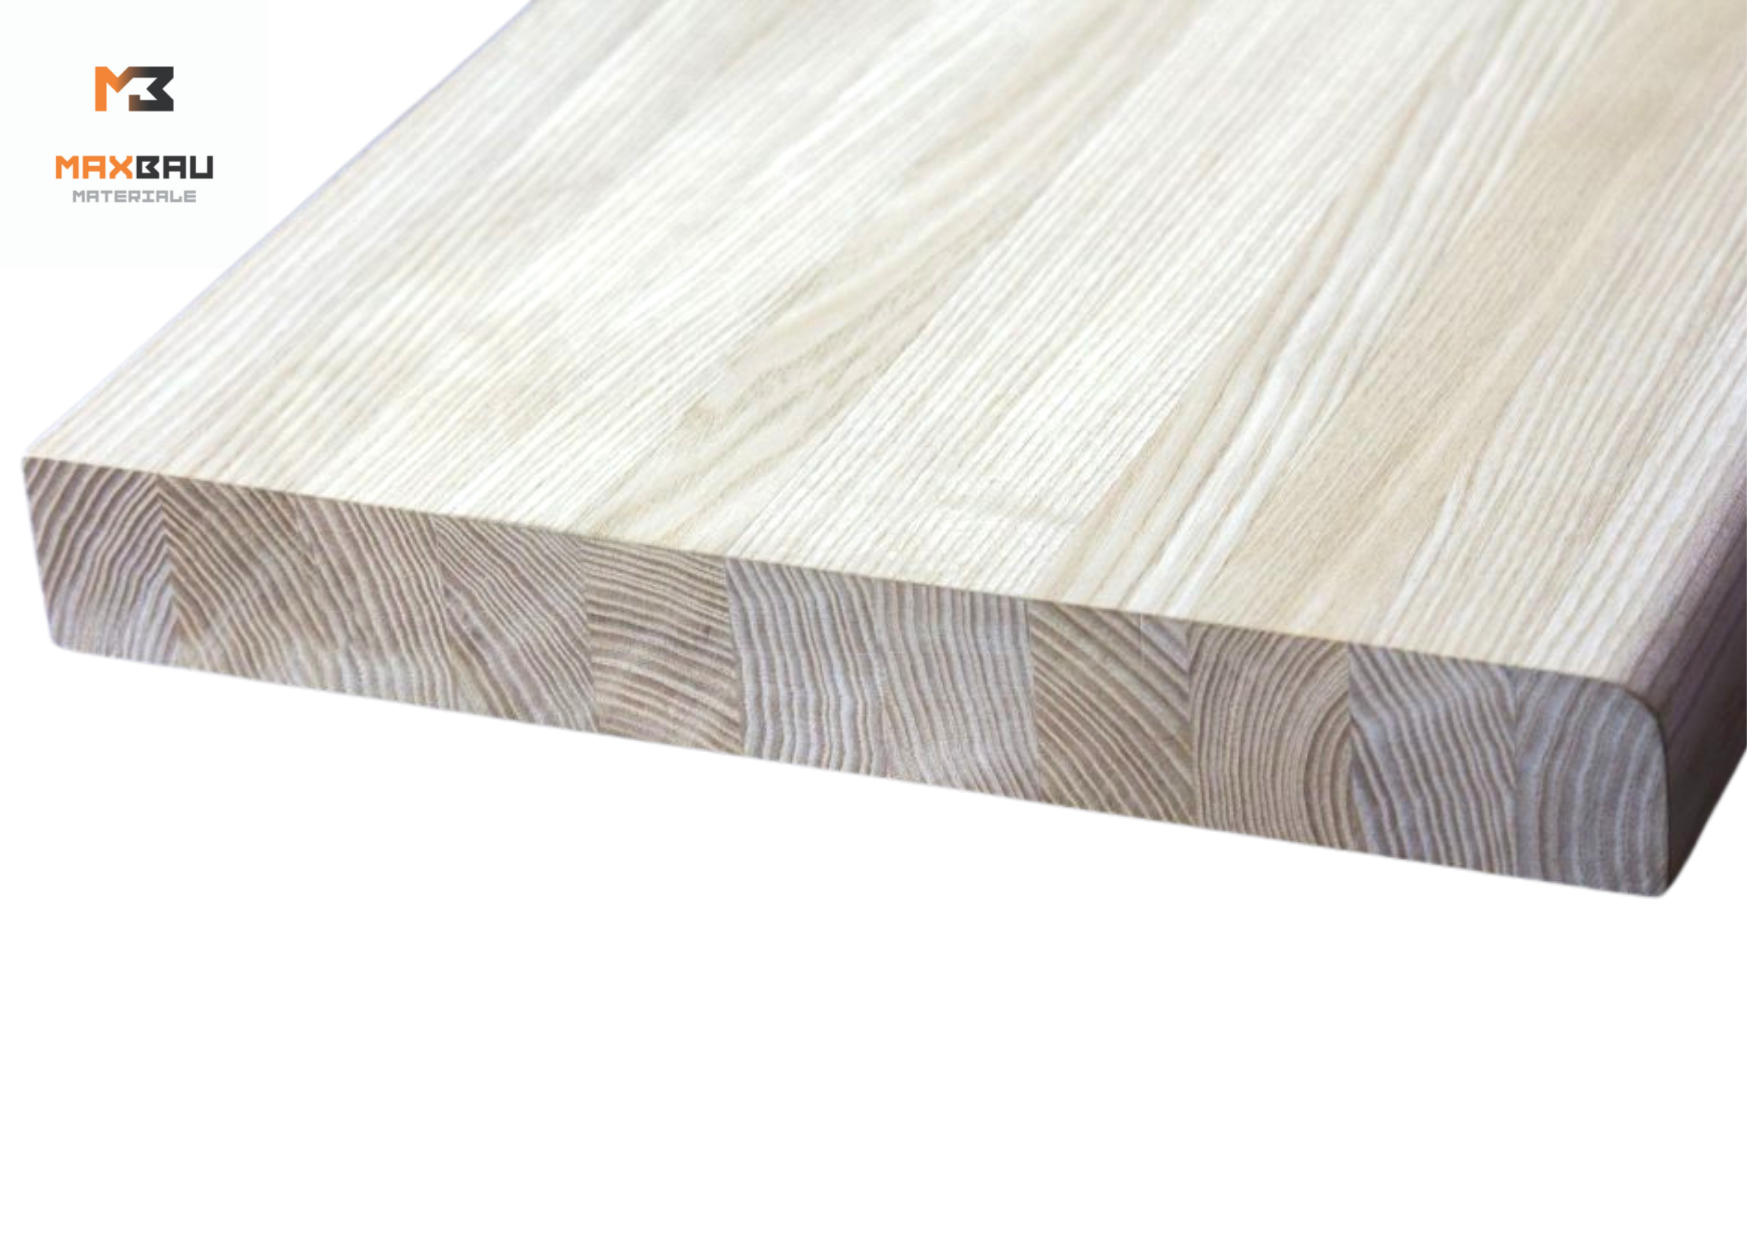 Plates of glued wood - MaxBau wooden plate glued 2500 x 400 x 28 mm class AB, https:maxbau.ro